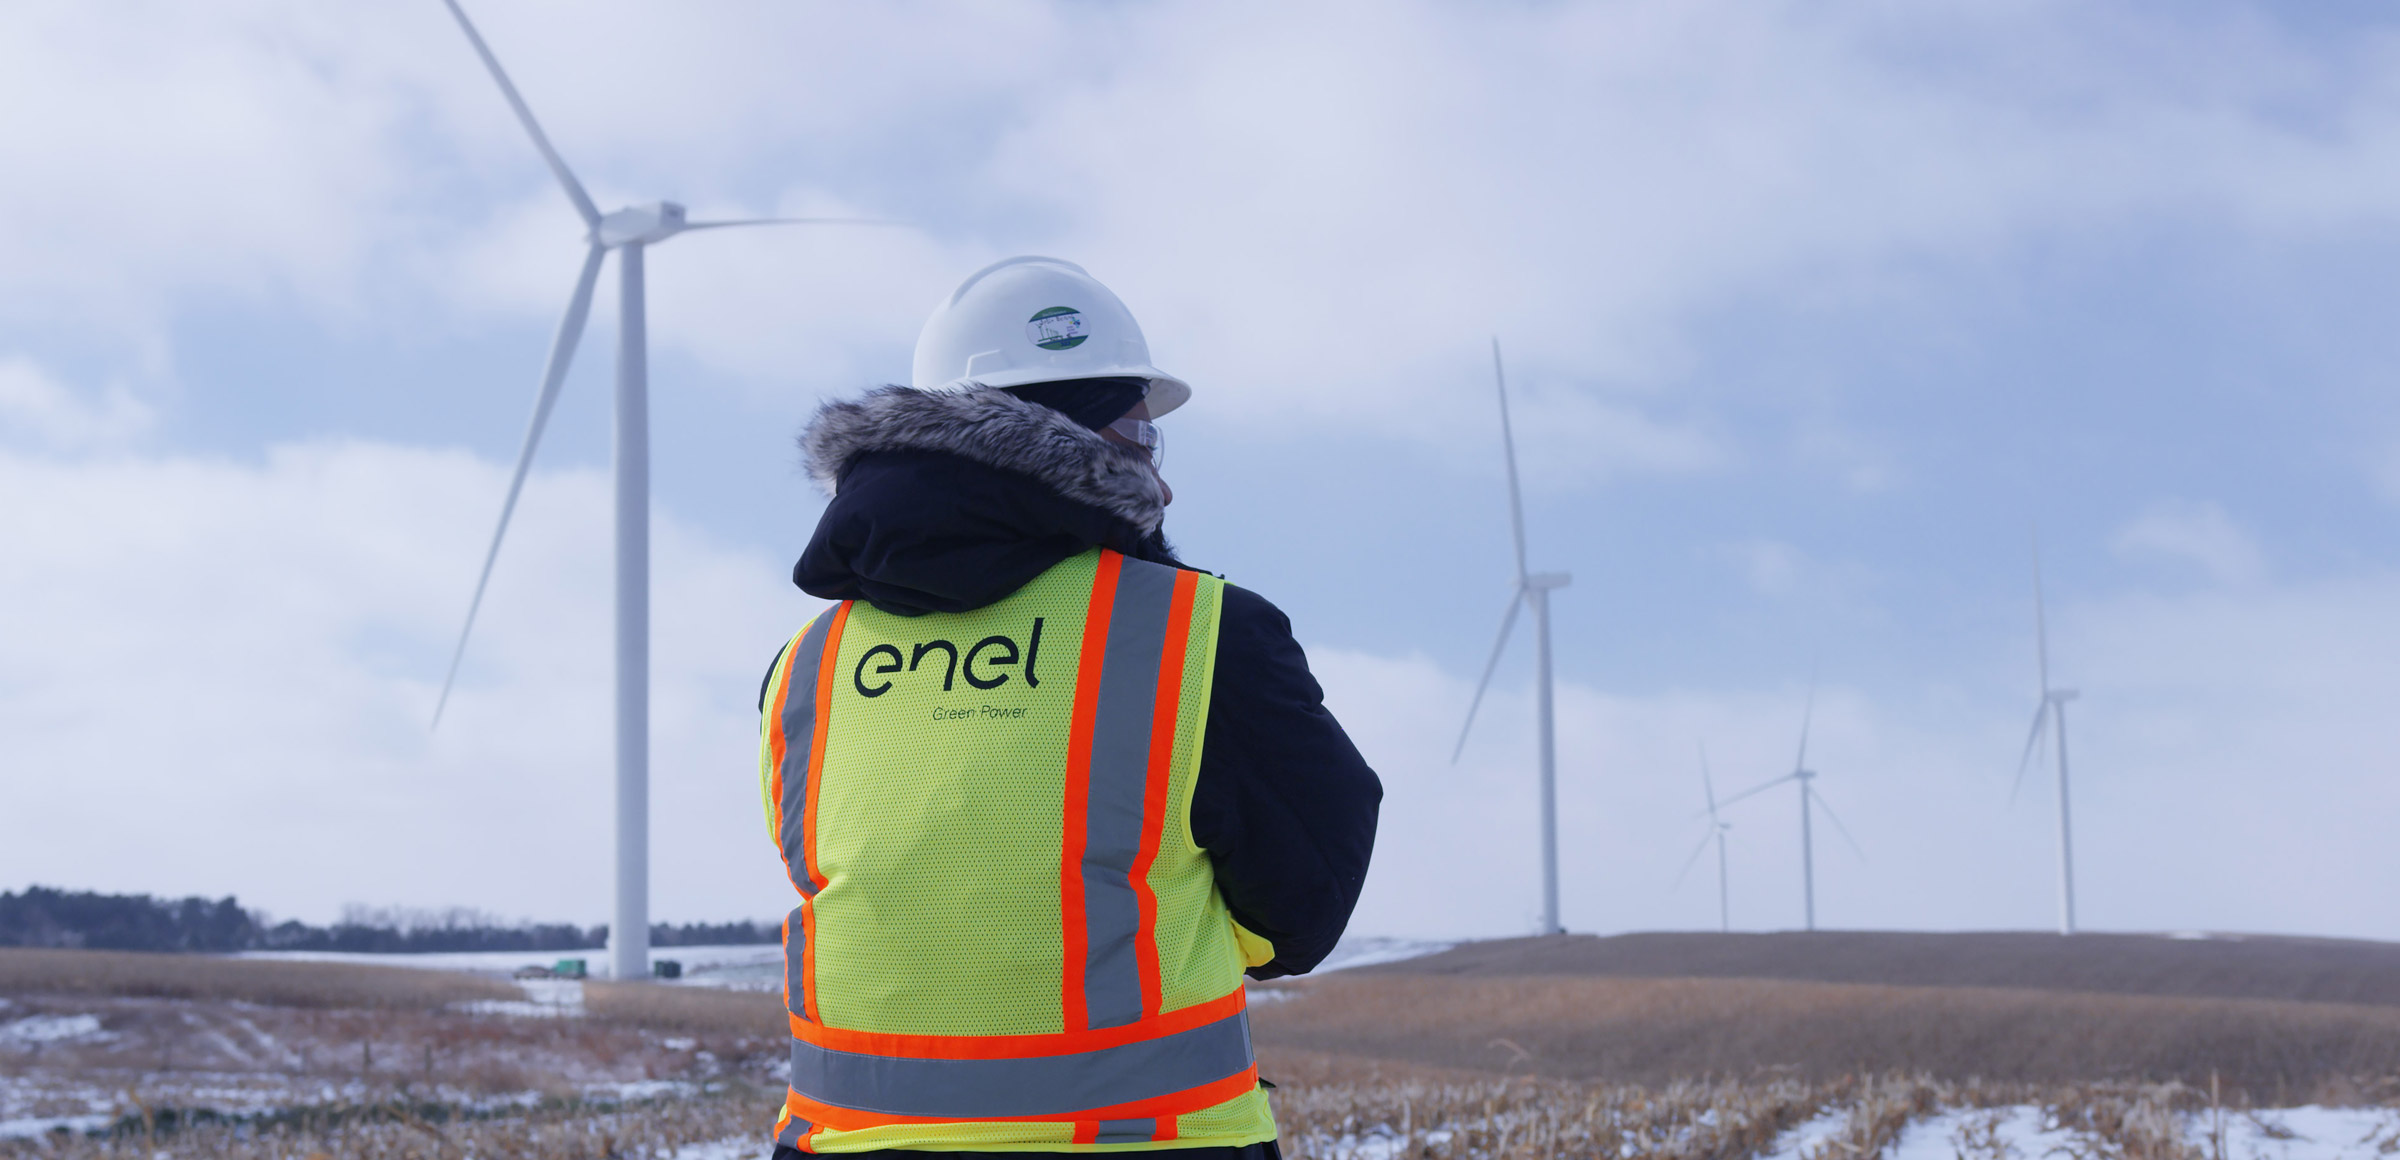 Enel employee looks at wind turbines